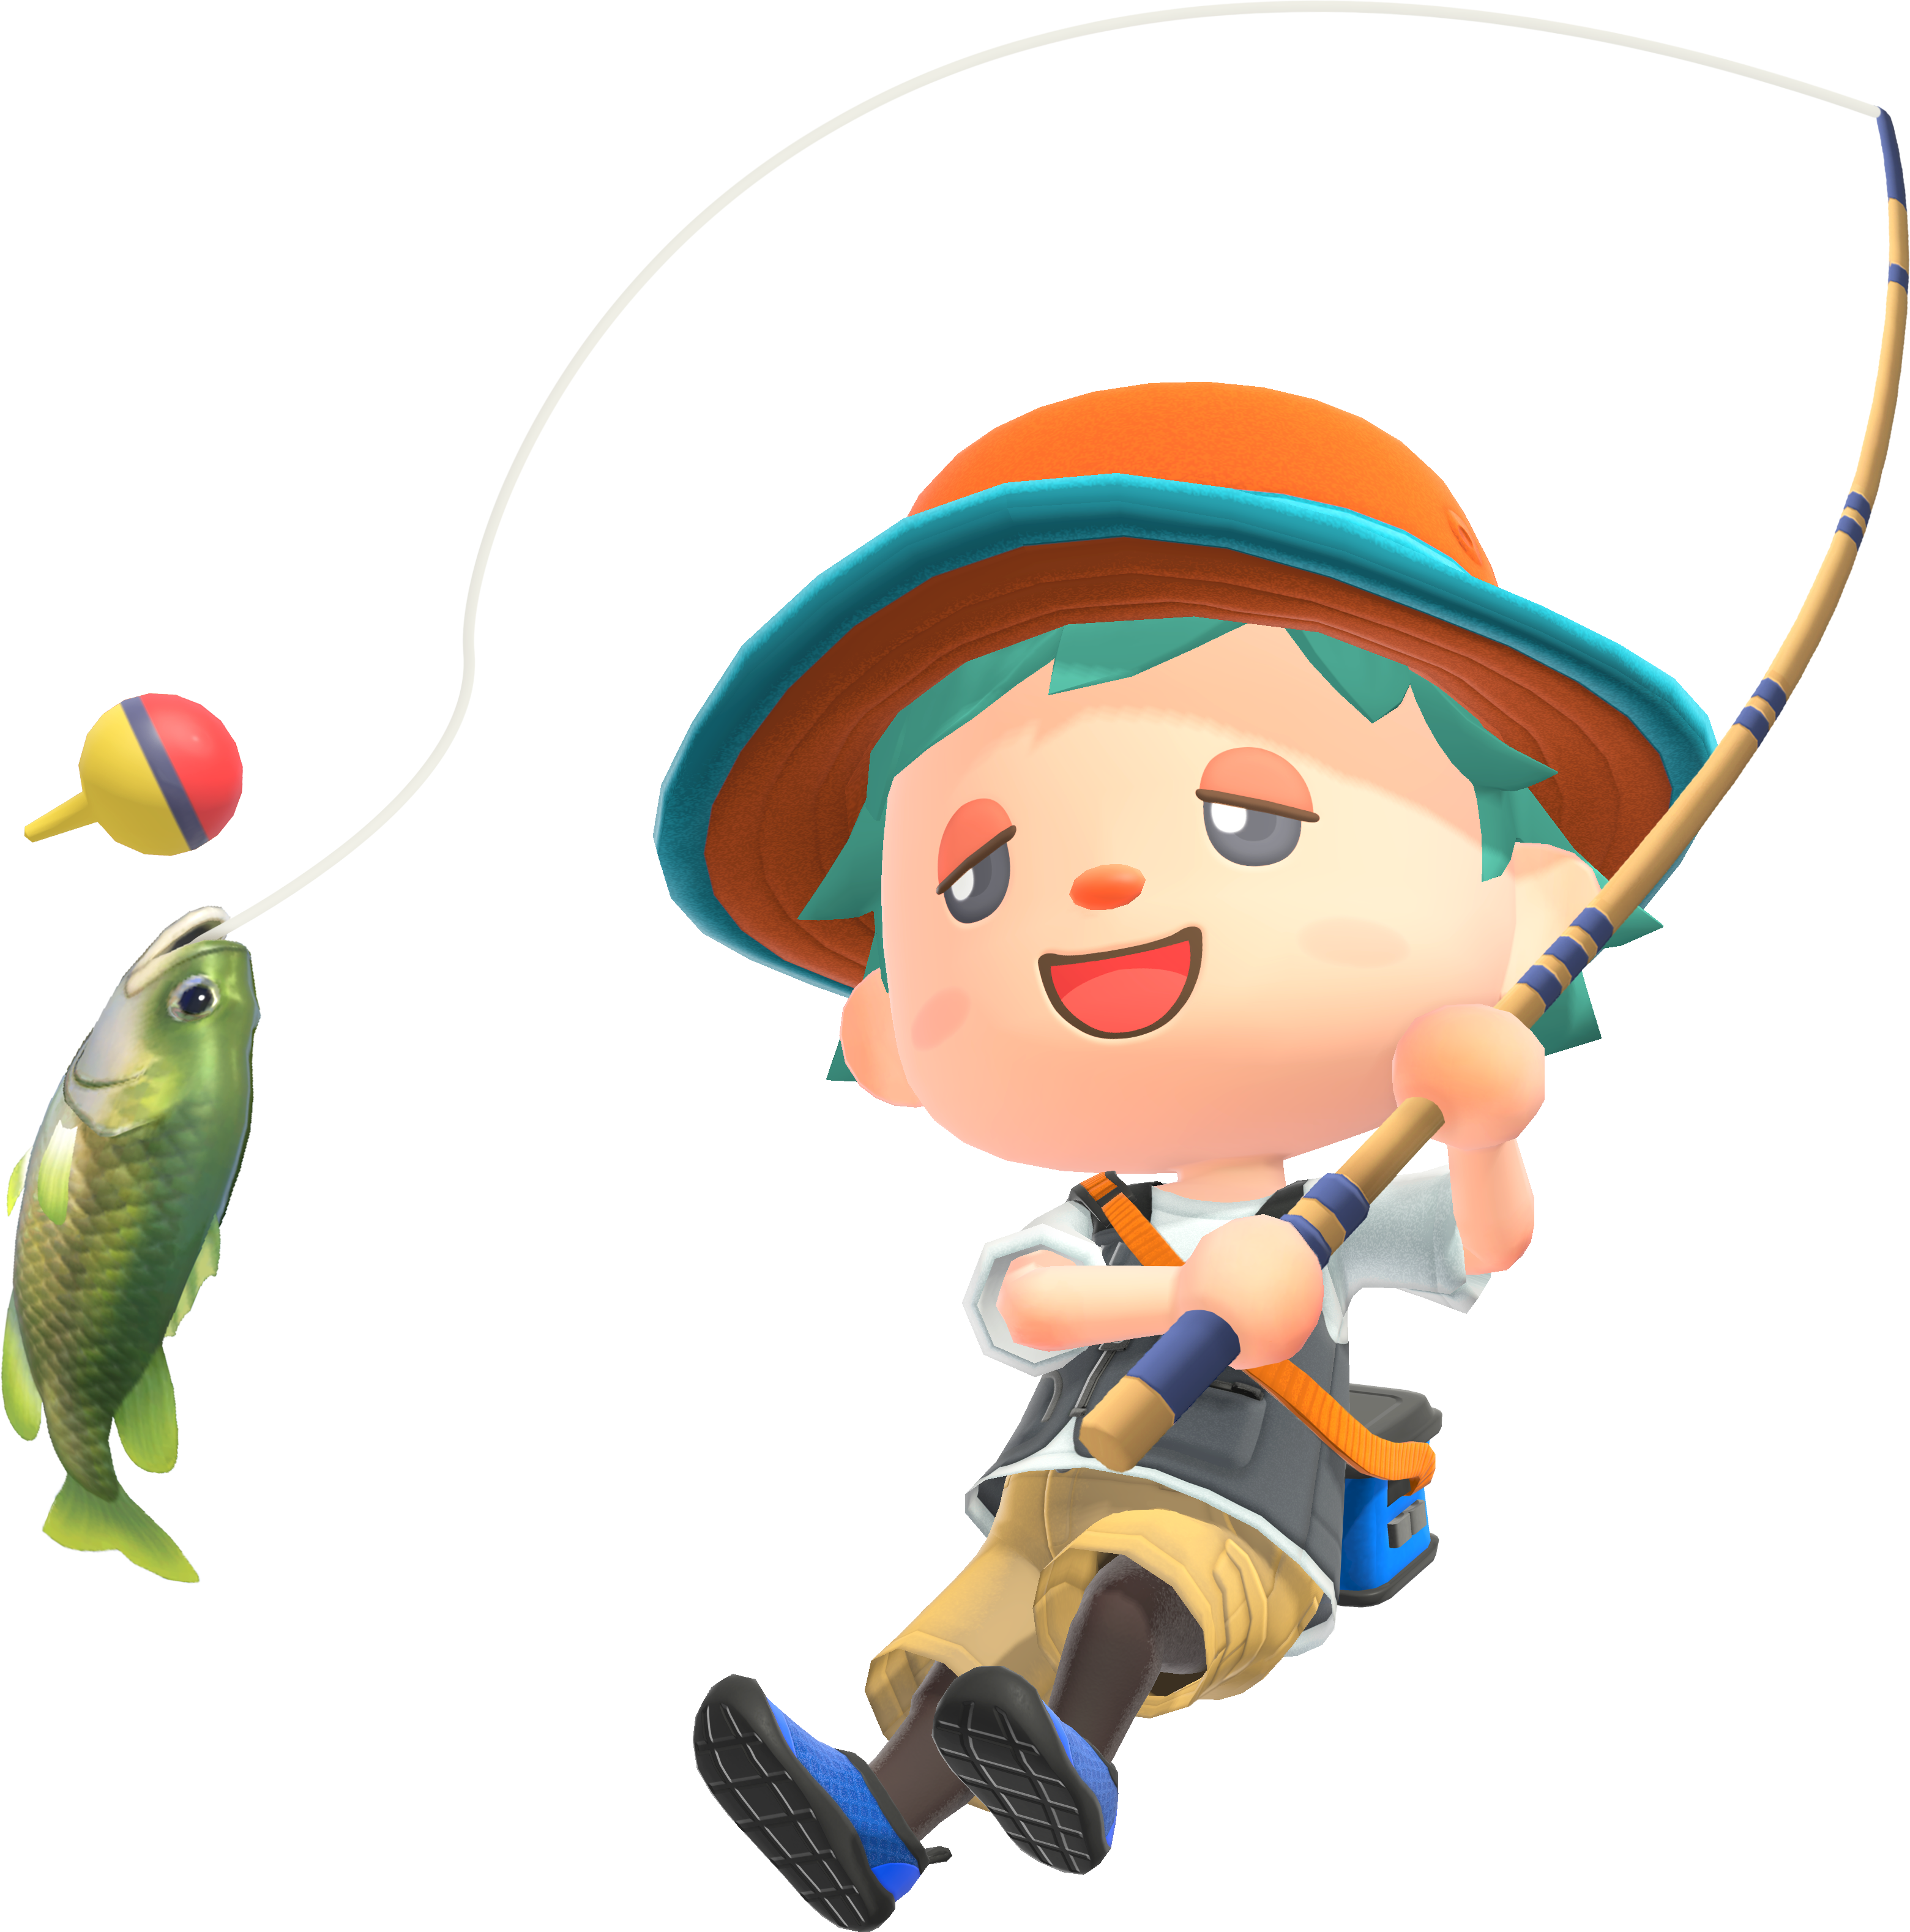 Animal-Crossing-New-Horizons_Characters-Fishing.png